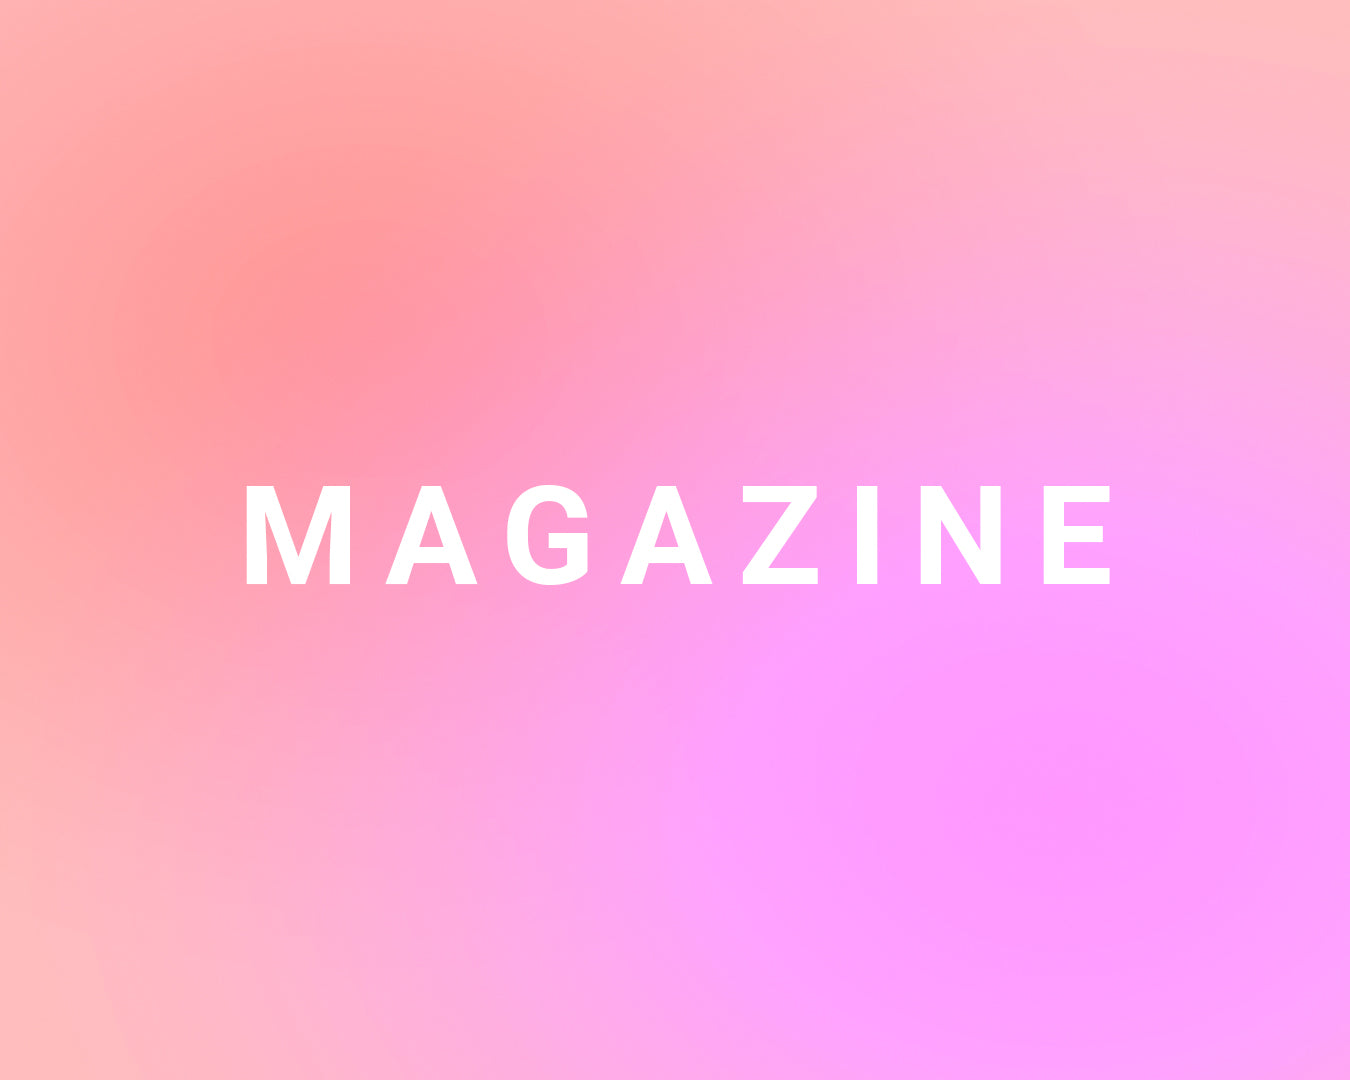 Magazine: Coming Soon